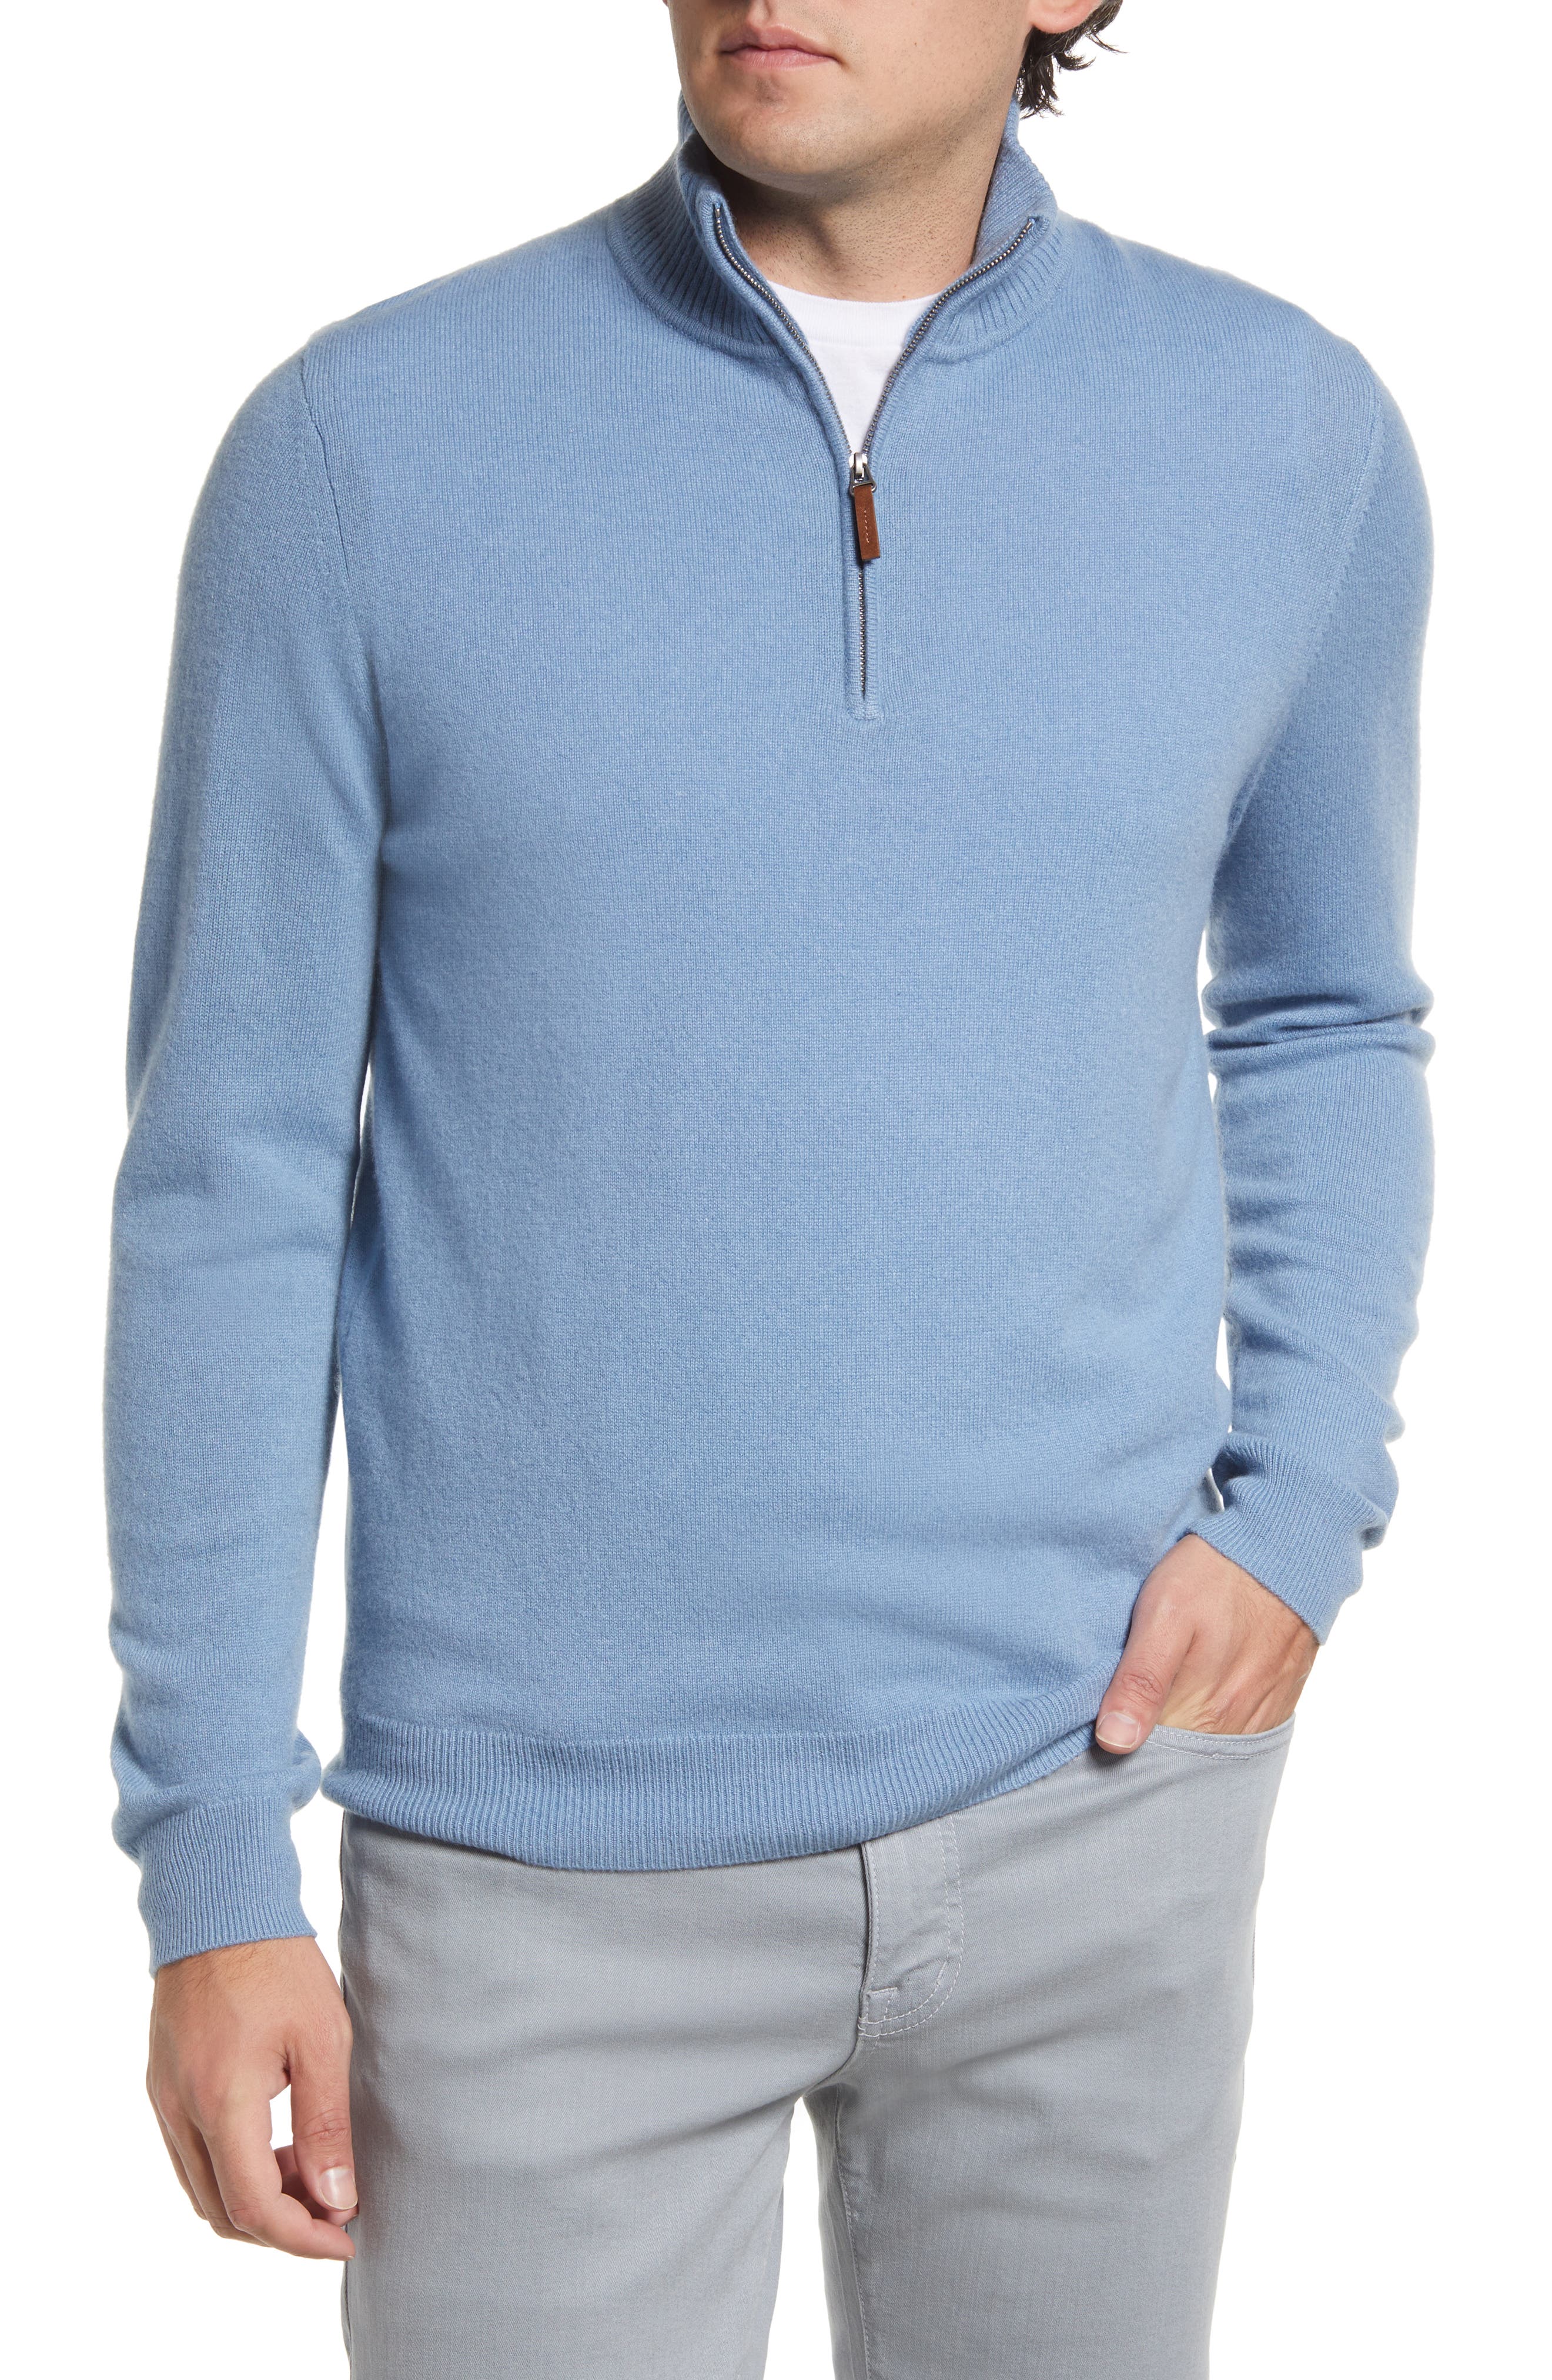 MEN FASHION Jumpers & Sweatshirts Elegant Blue XXL discount 64% Decenio jumper 